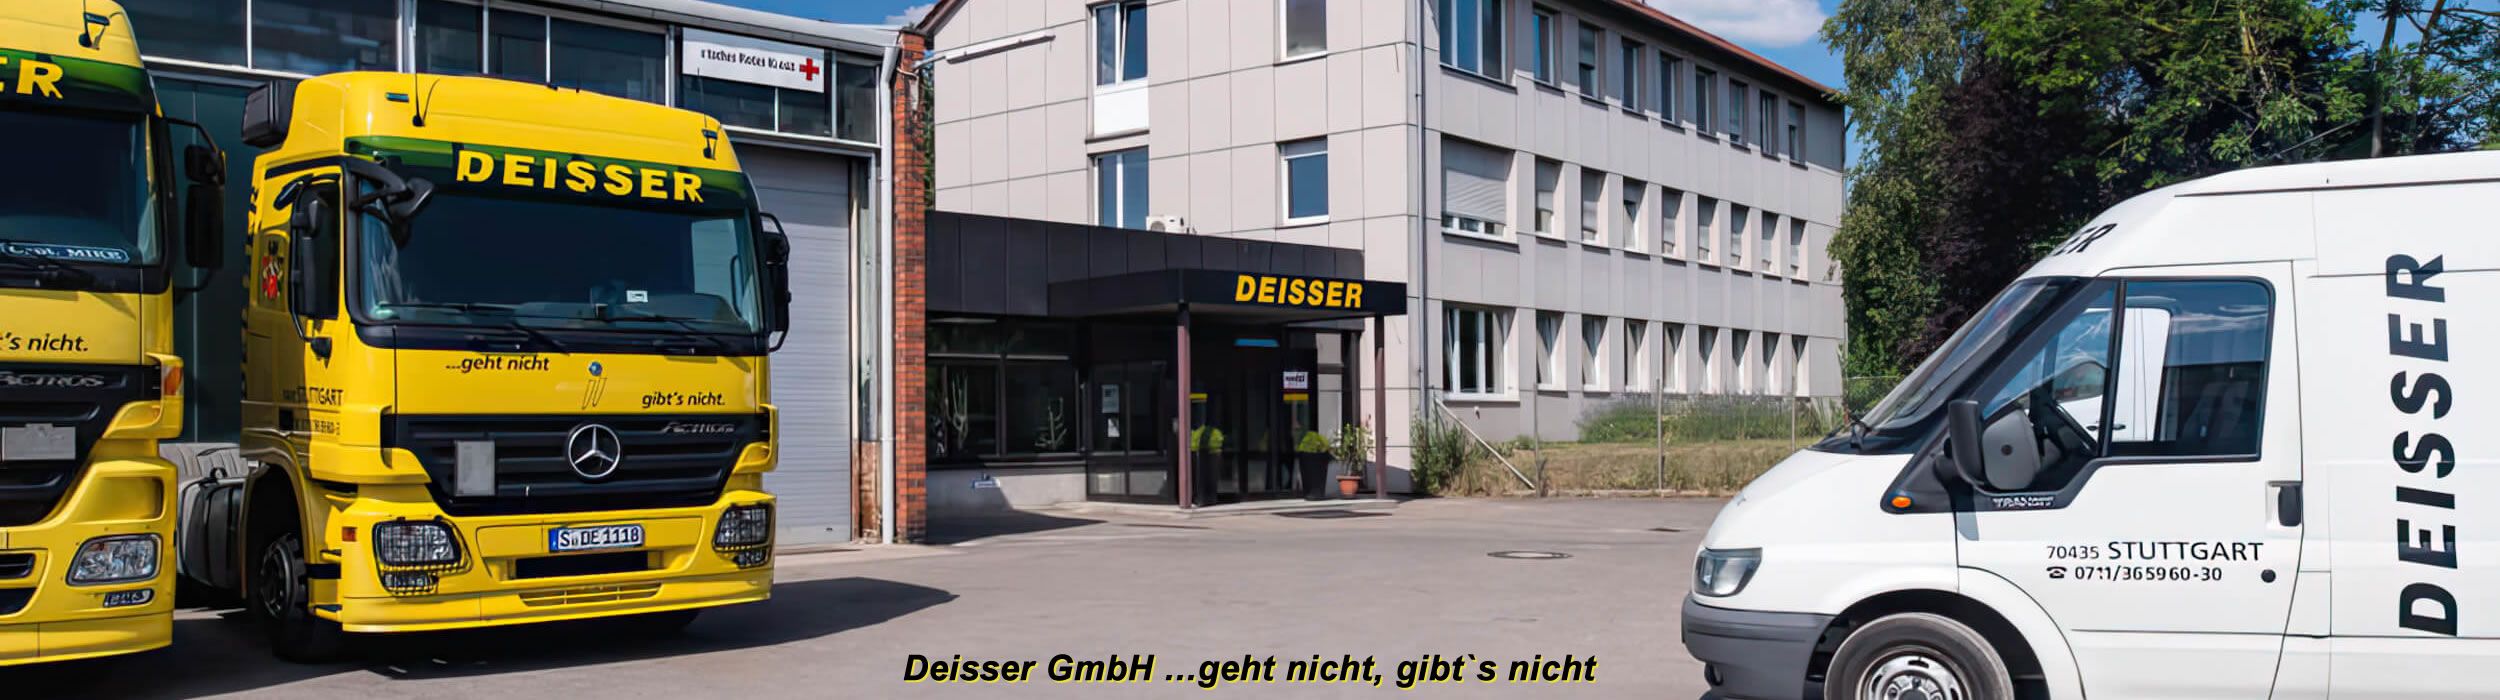 Deisser GmbH / Transportlogistik Seecontainer / Impressum